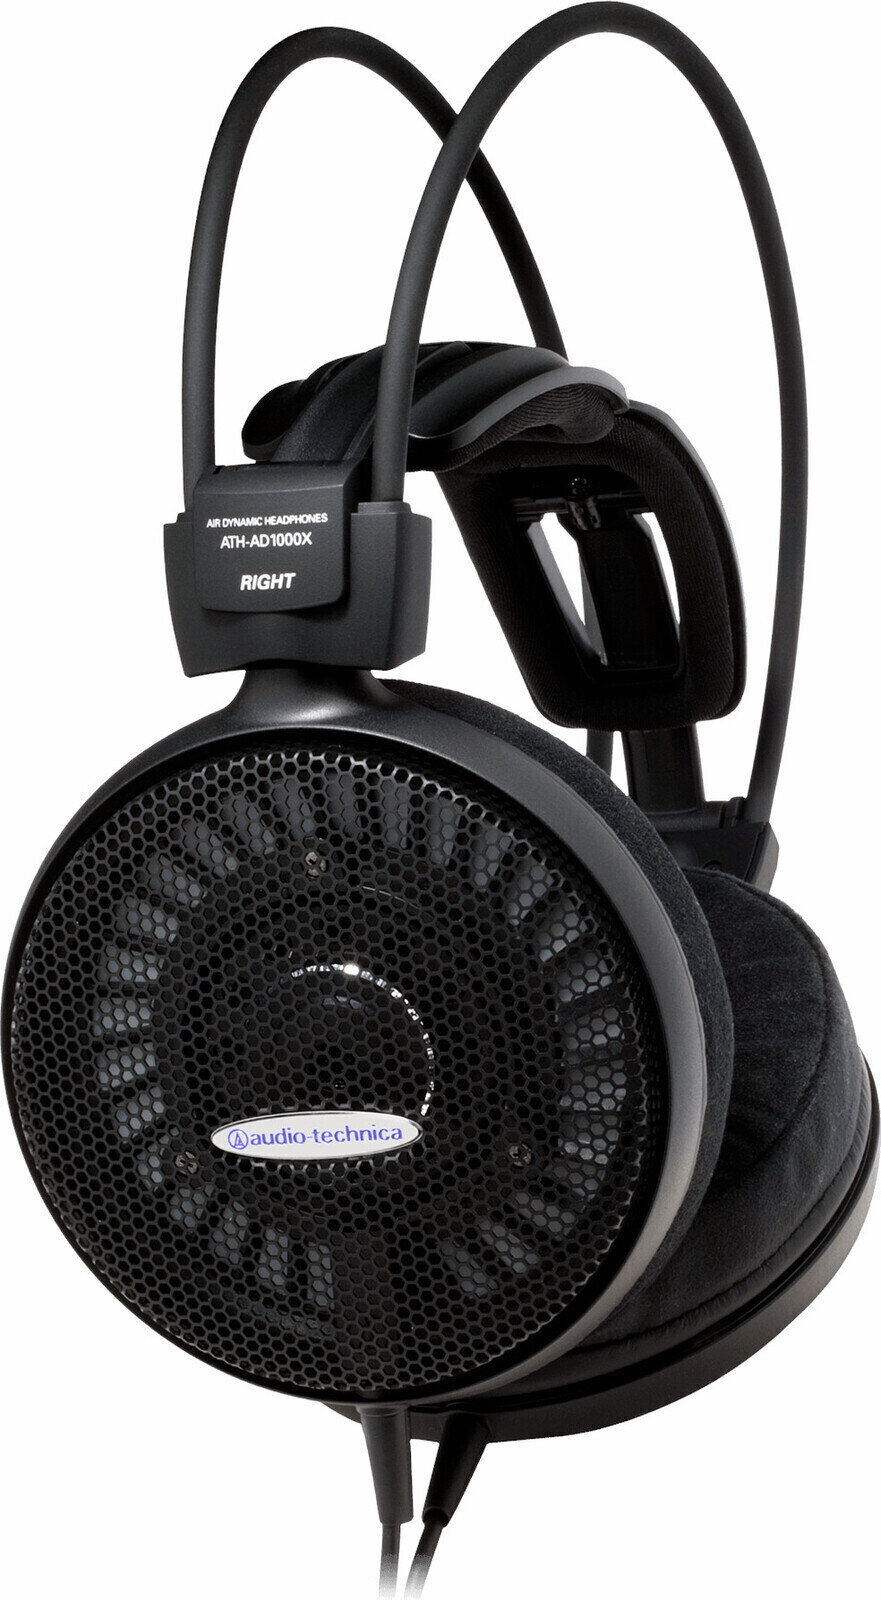 Słuchawki Hi-Fi Audio-Technica ATH-AD1000X